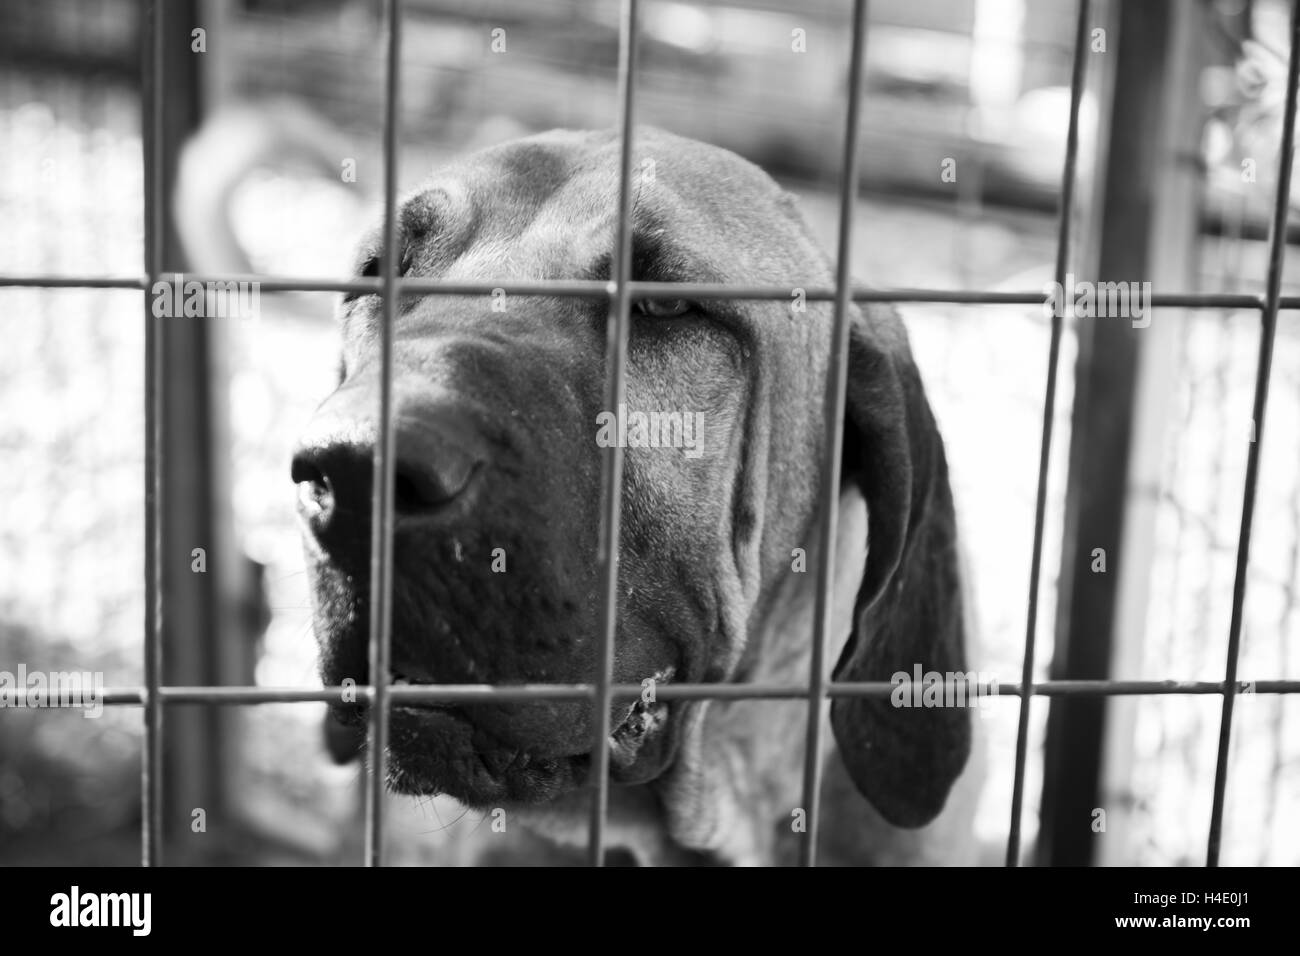 Hound dog locked and abuse, animal neglect Stock Photo